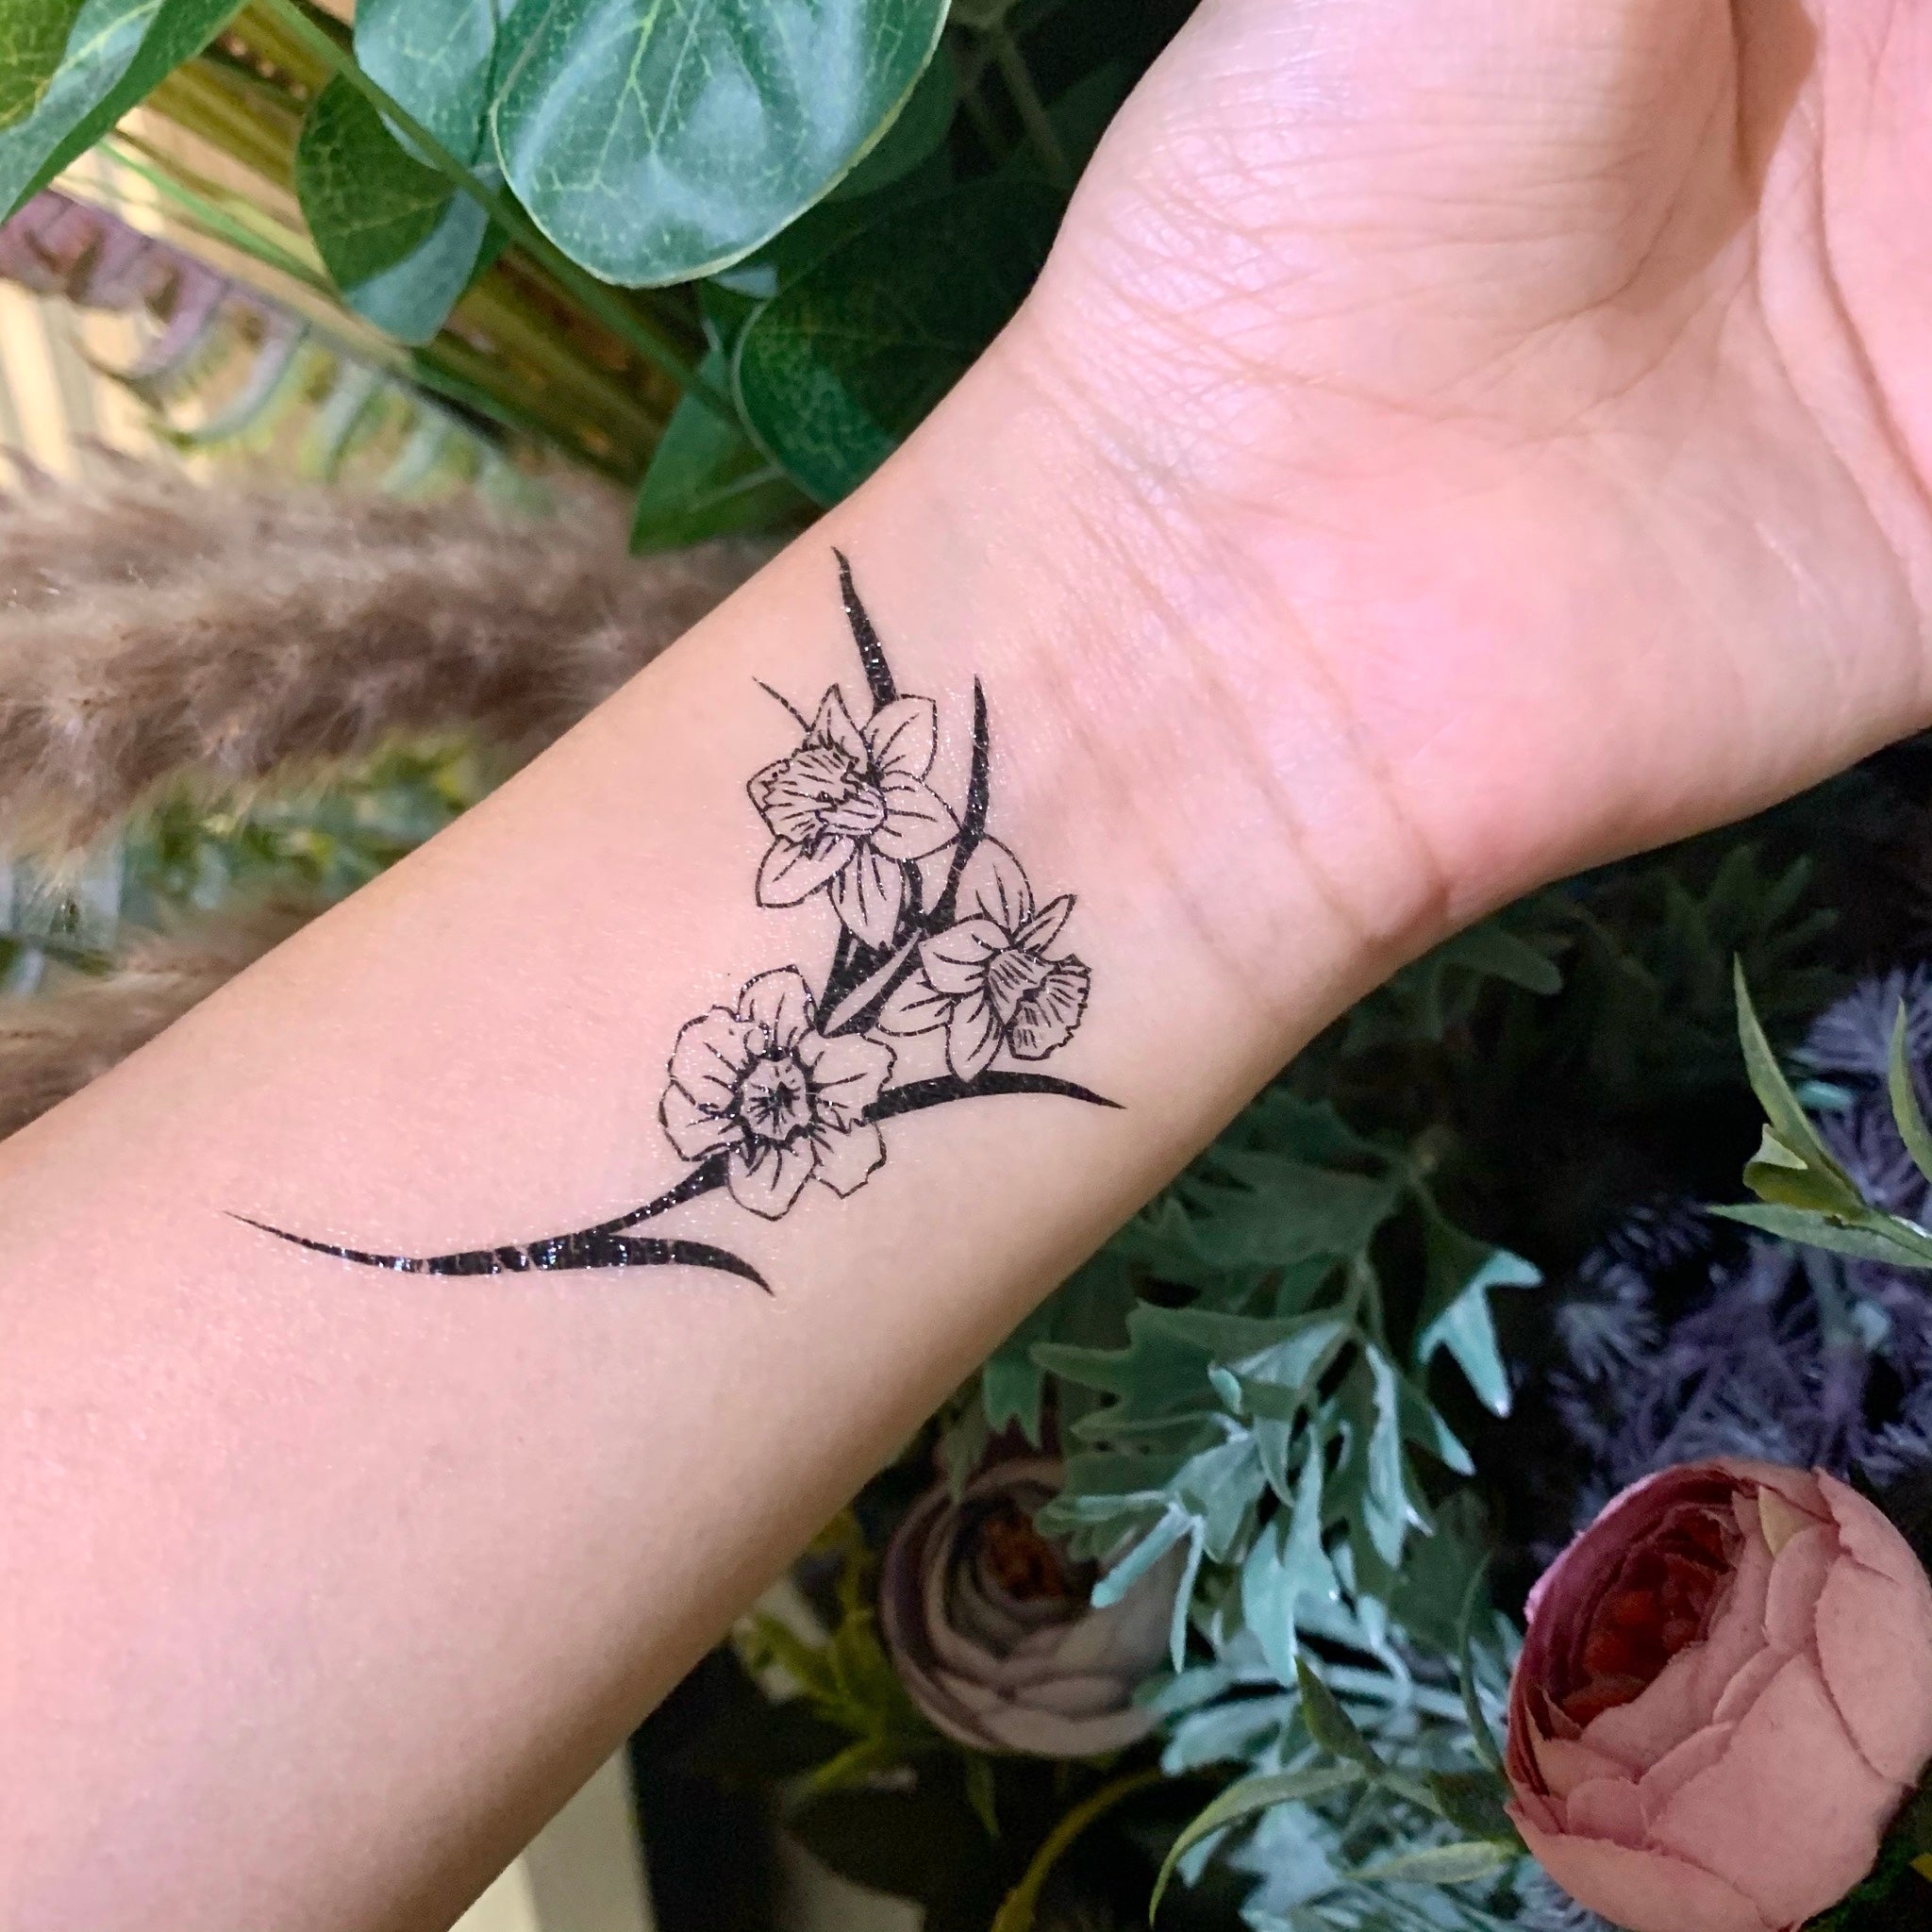 Midnight Pumpkin Tattoo Parlour - Little dotwork daffodil flower by Asi ☺️ # tattoo #tattoos #dotwork #blackwork #daffodil #midnightpumpkintattooparlour  | Facebook